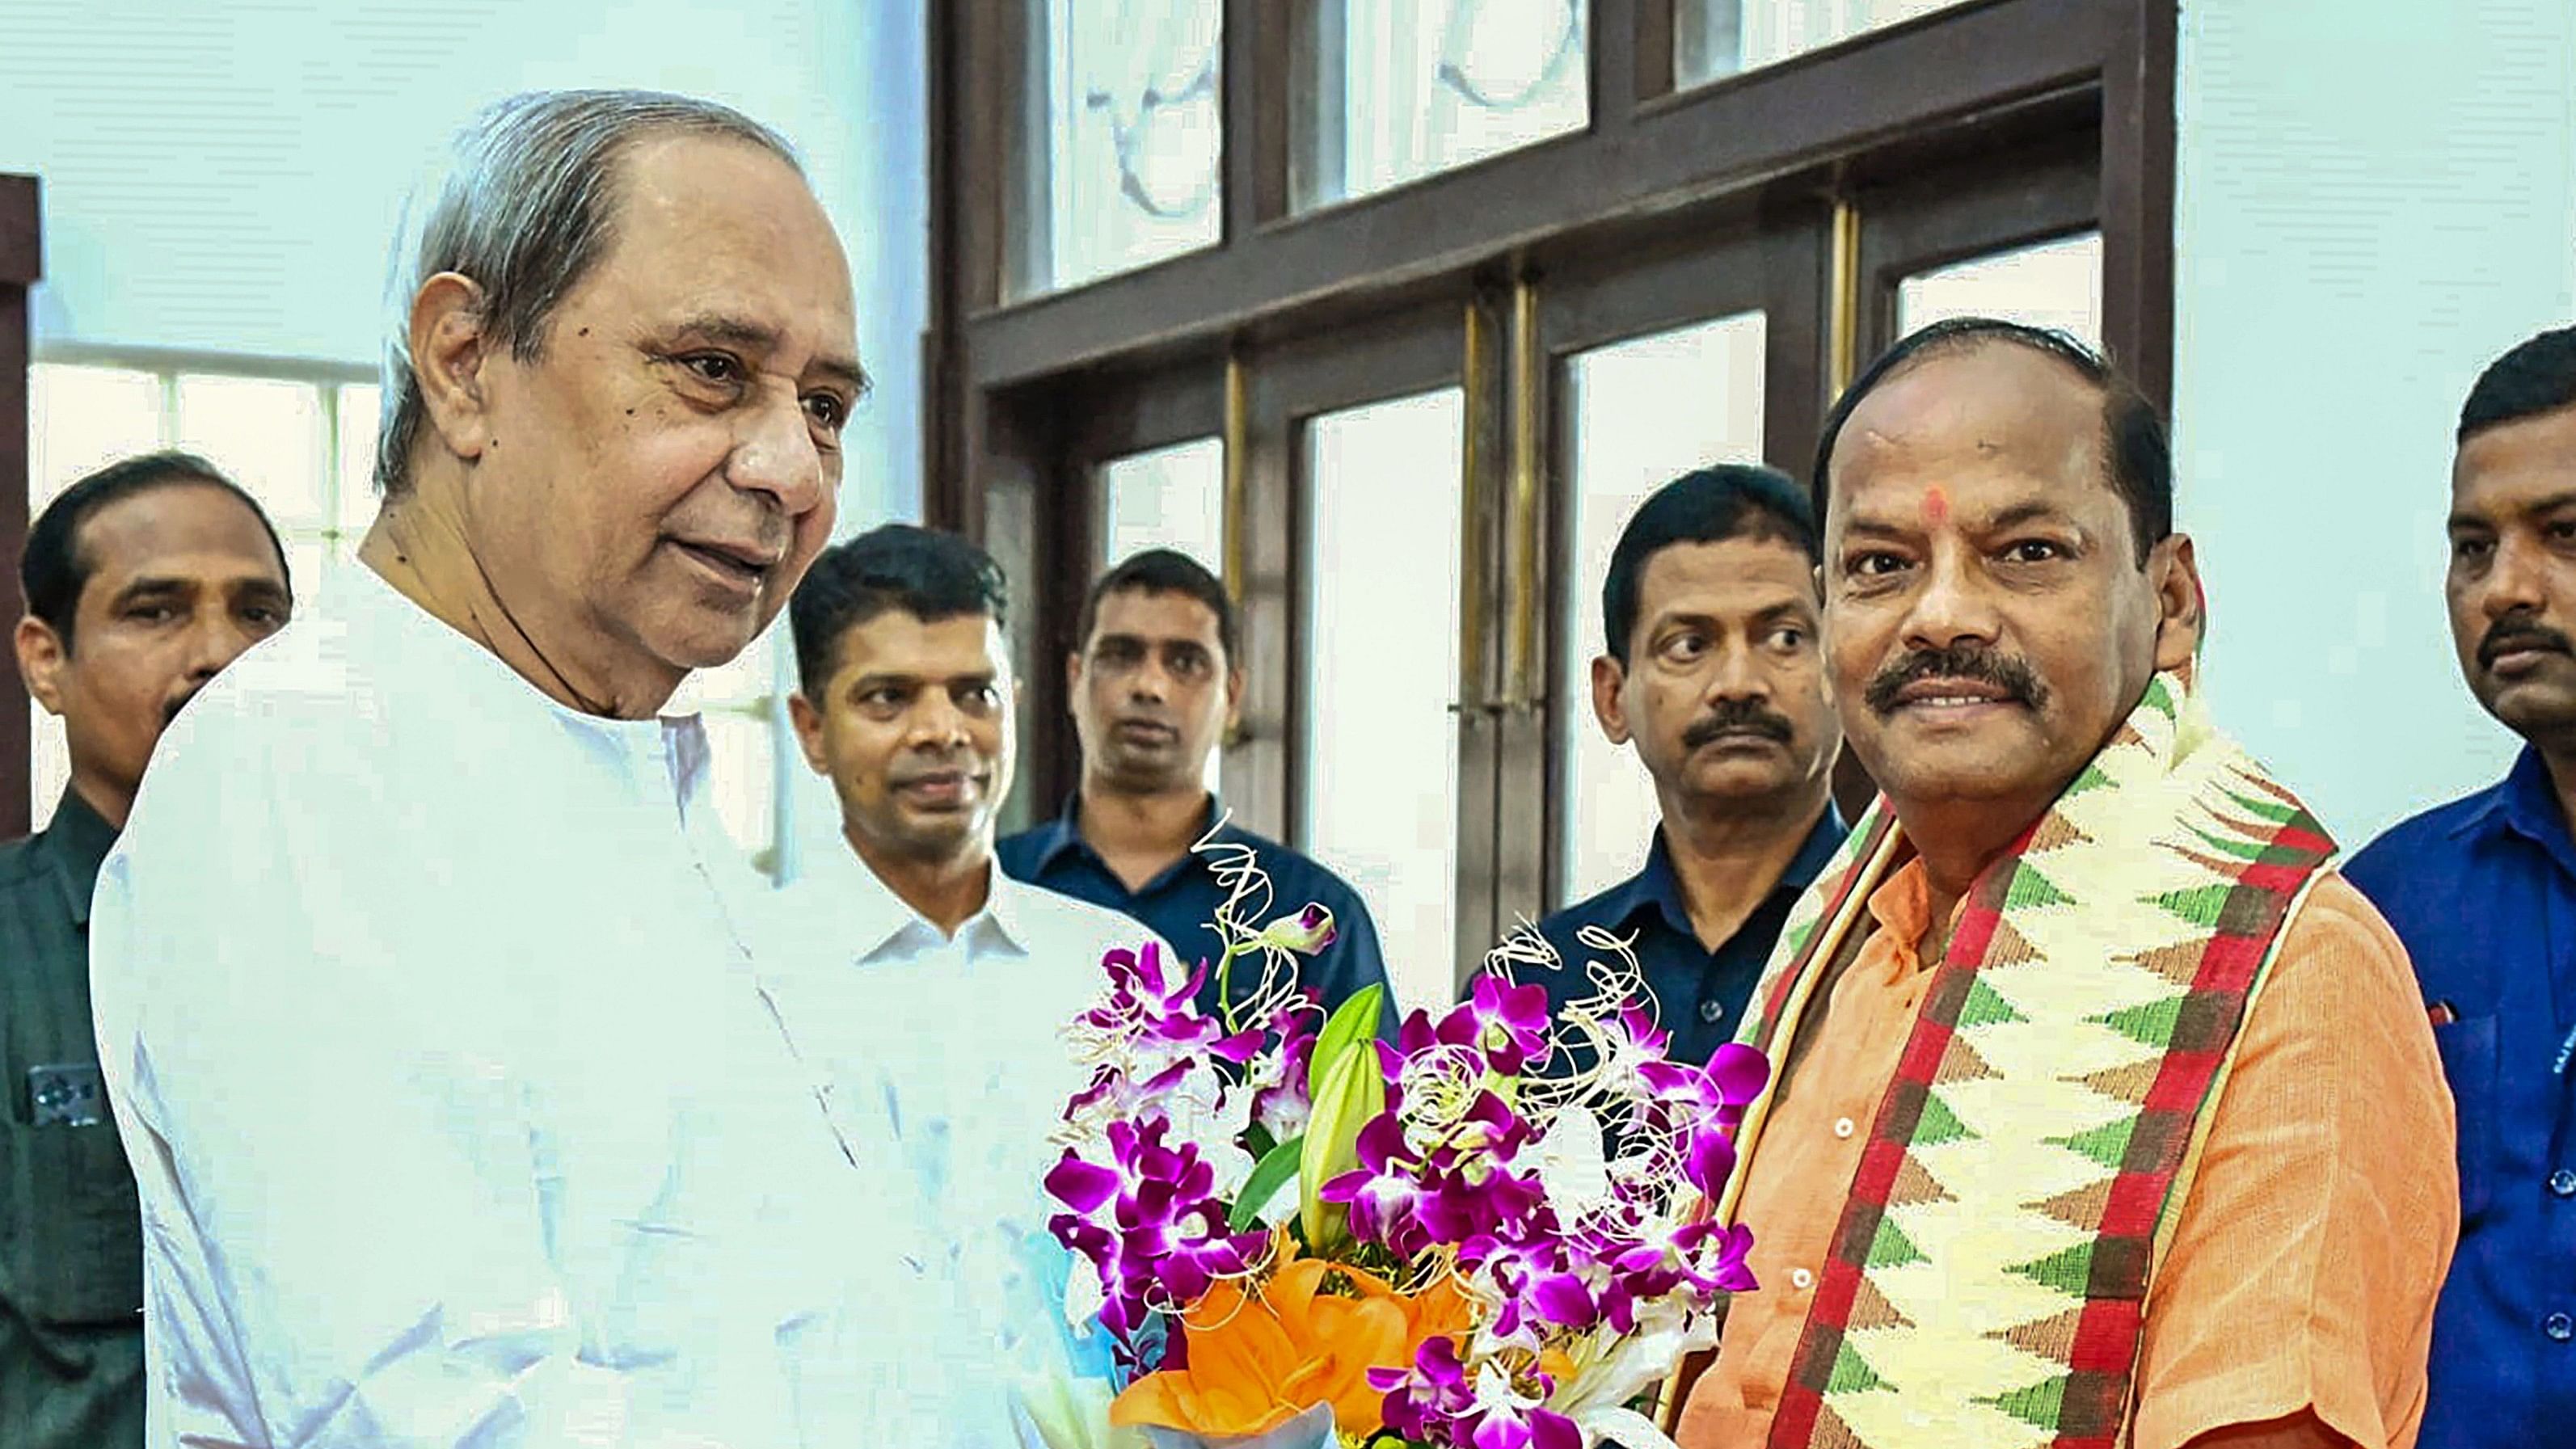 <div class="paragraphs"><p>Odisha Chief Minister Naveen Patnaik greets Governor-designate Raghubar Das at RajBhavan.</p></div>